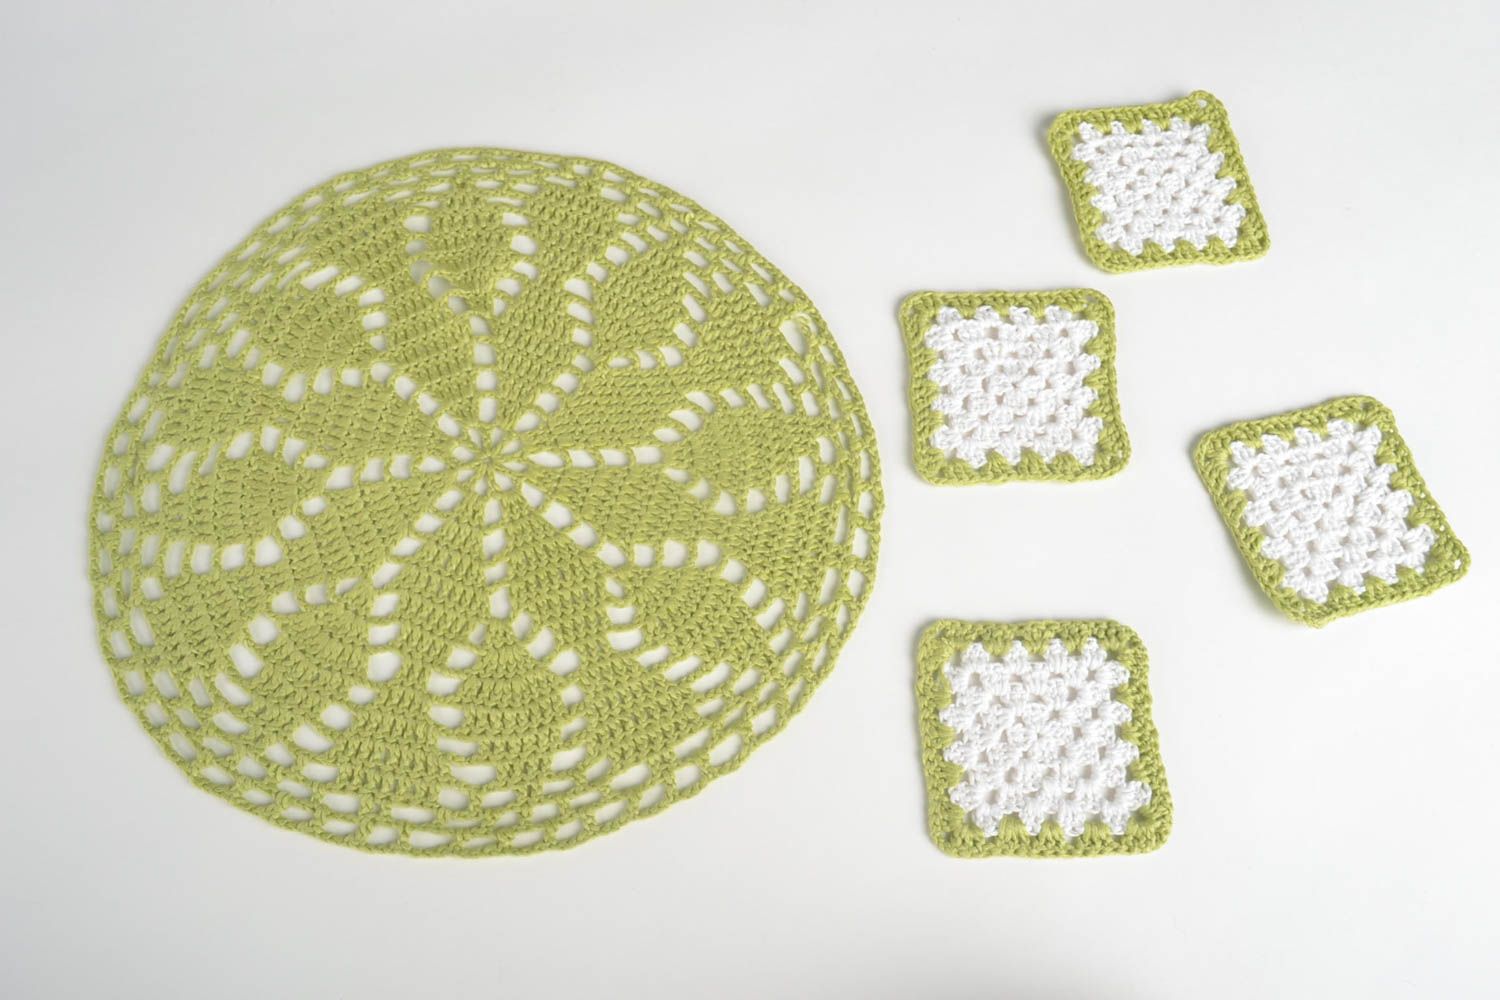 Handmade crochet napkin crochat coaster 4 hot pads crochet ideas home textiles photo 3